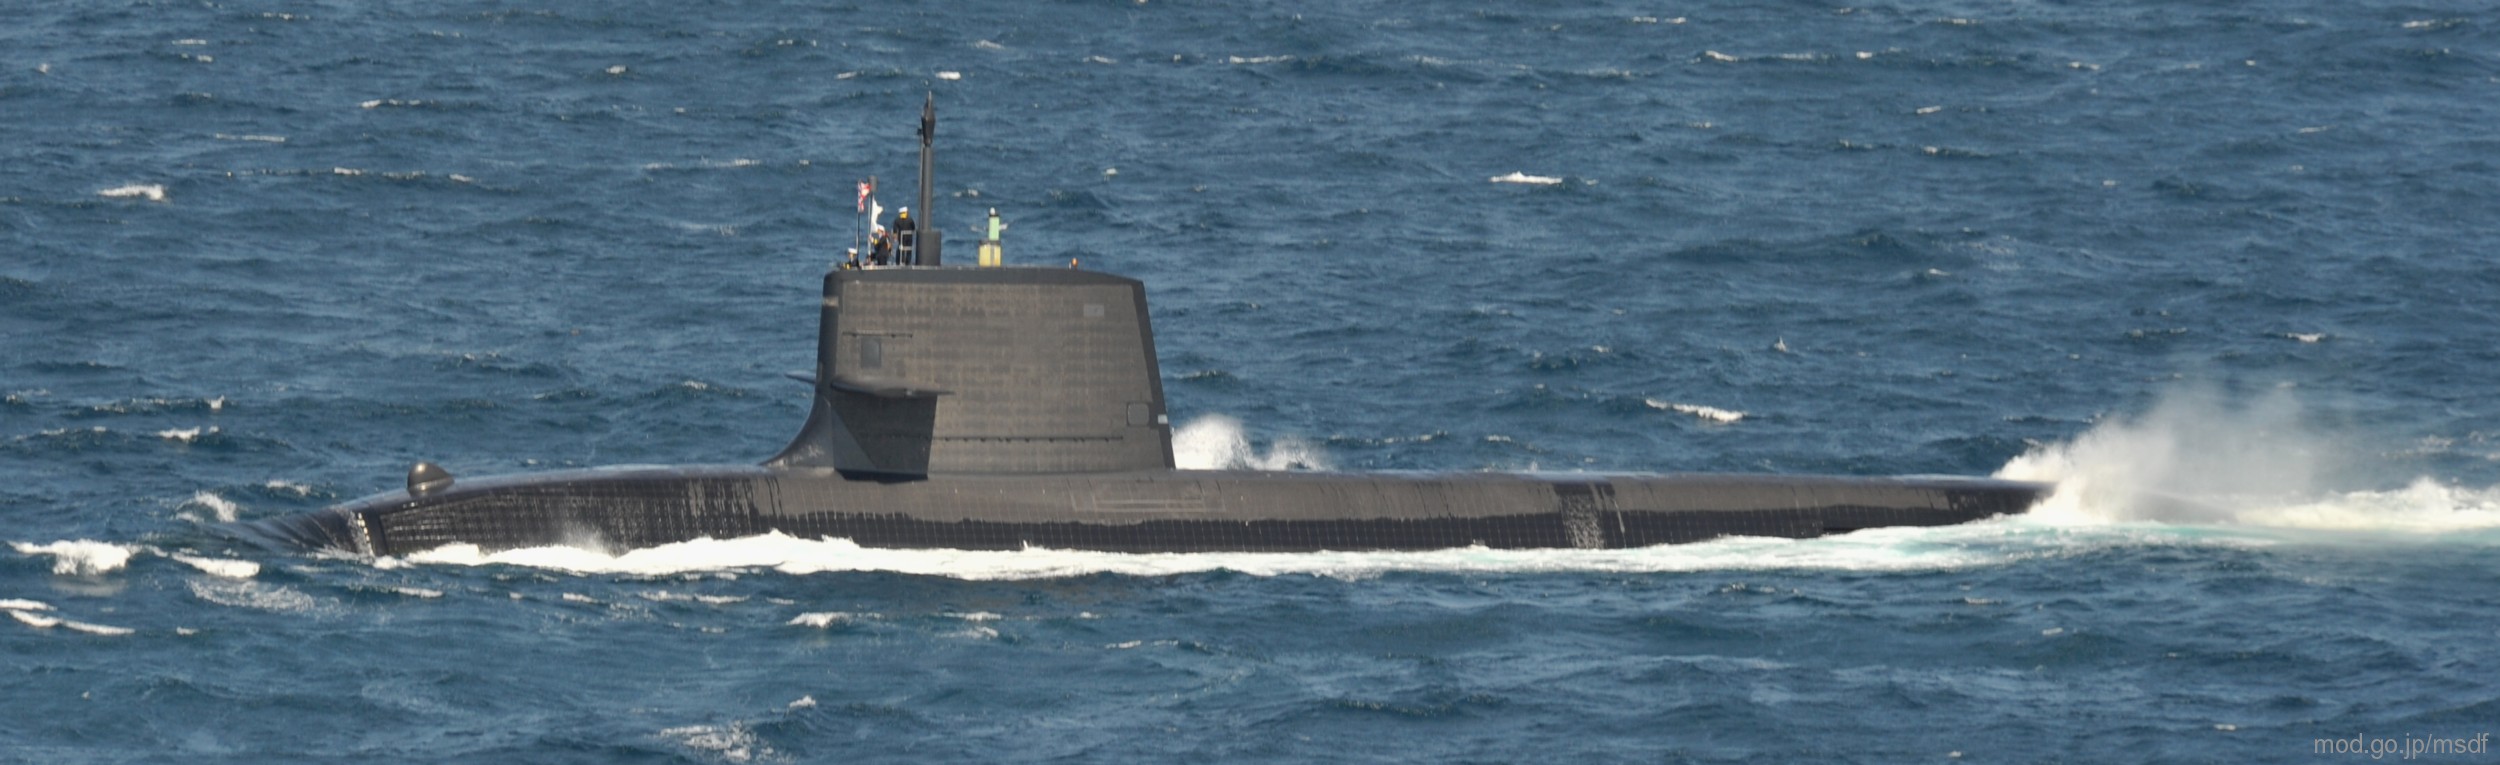 ss-504 js kenryu 16ss soryu class attack submarine ssk japan maritime self defense force jmsdf 03